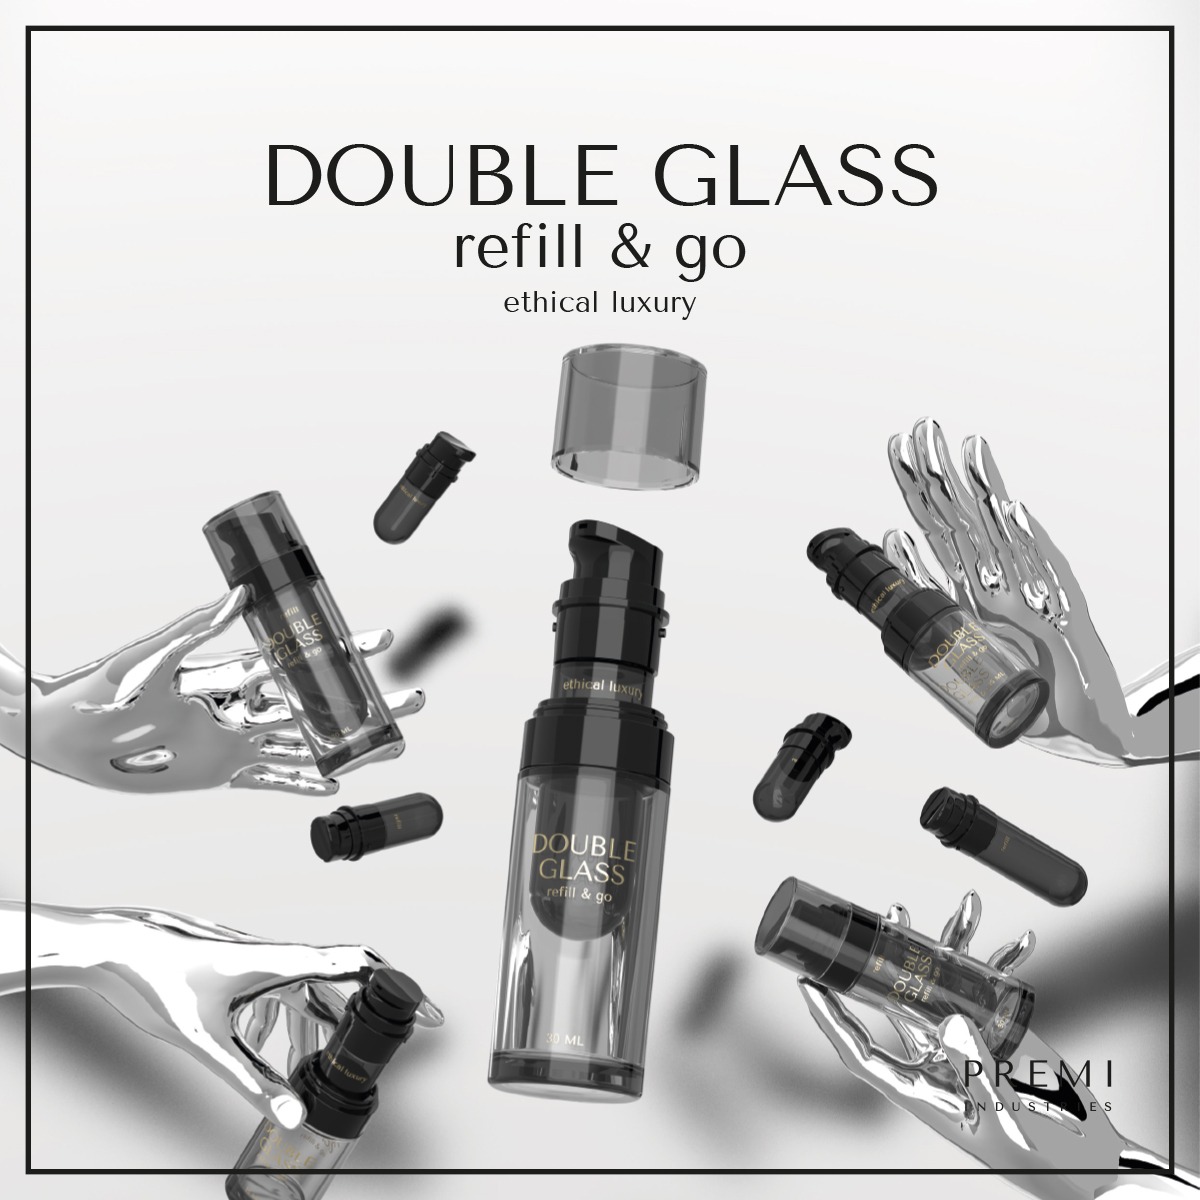 01-DOUBLE GLASS REFILL & GO